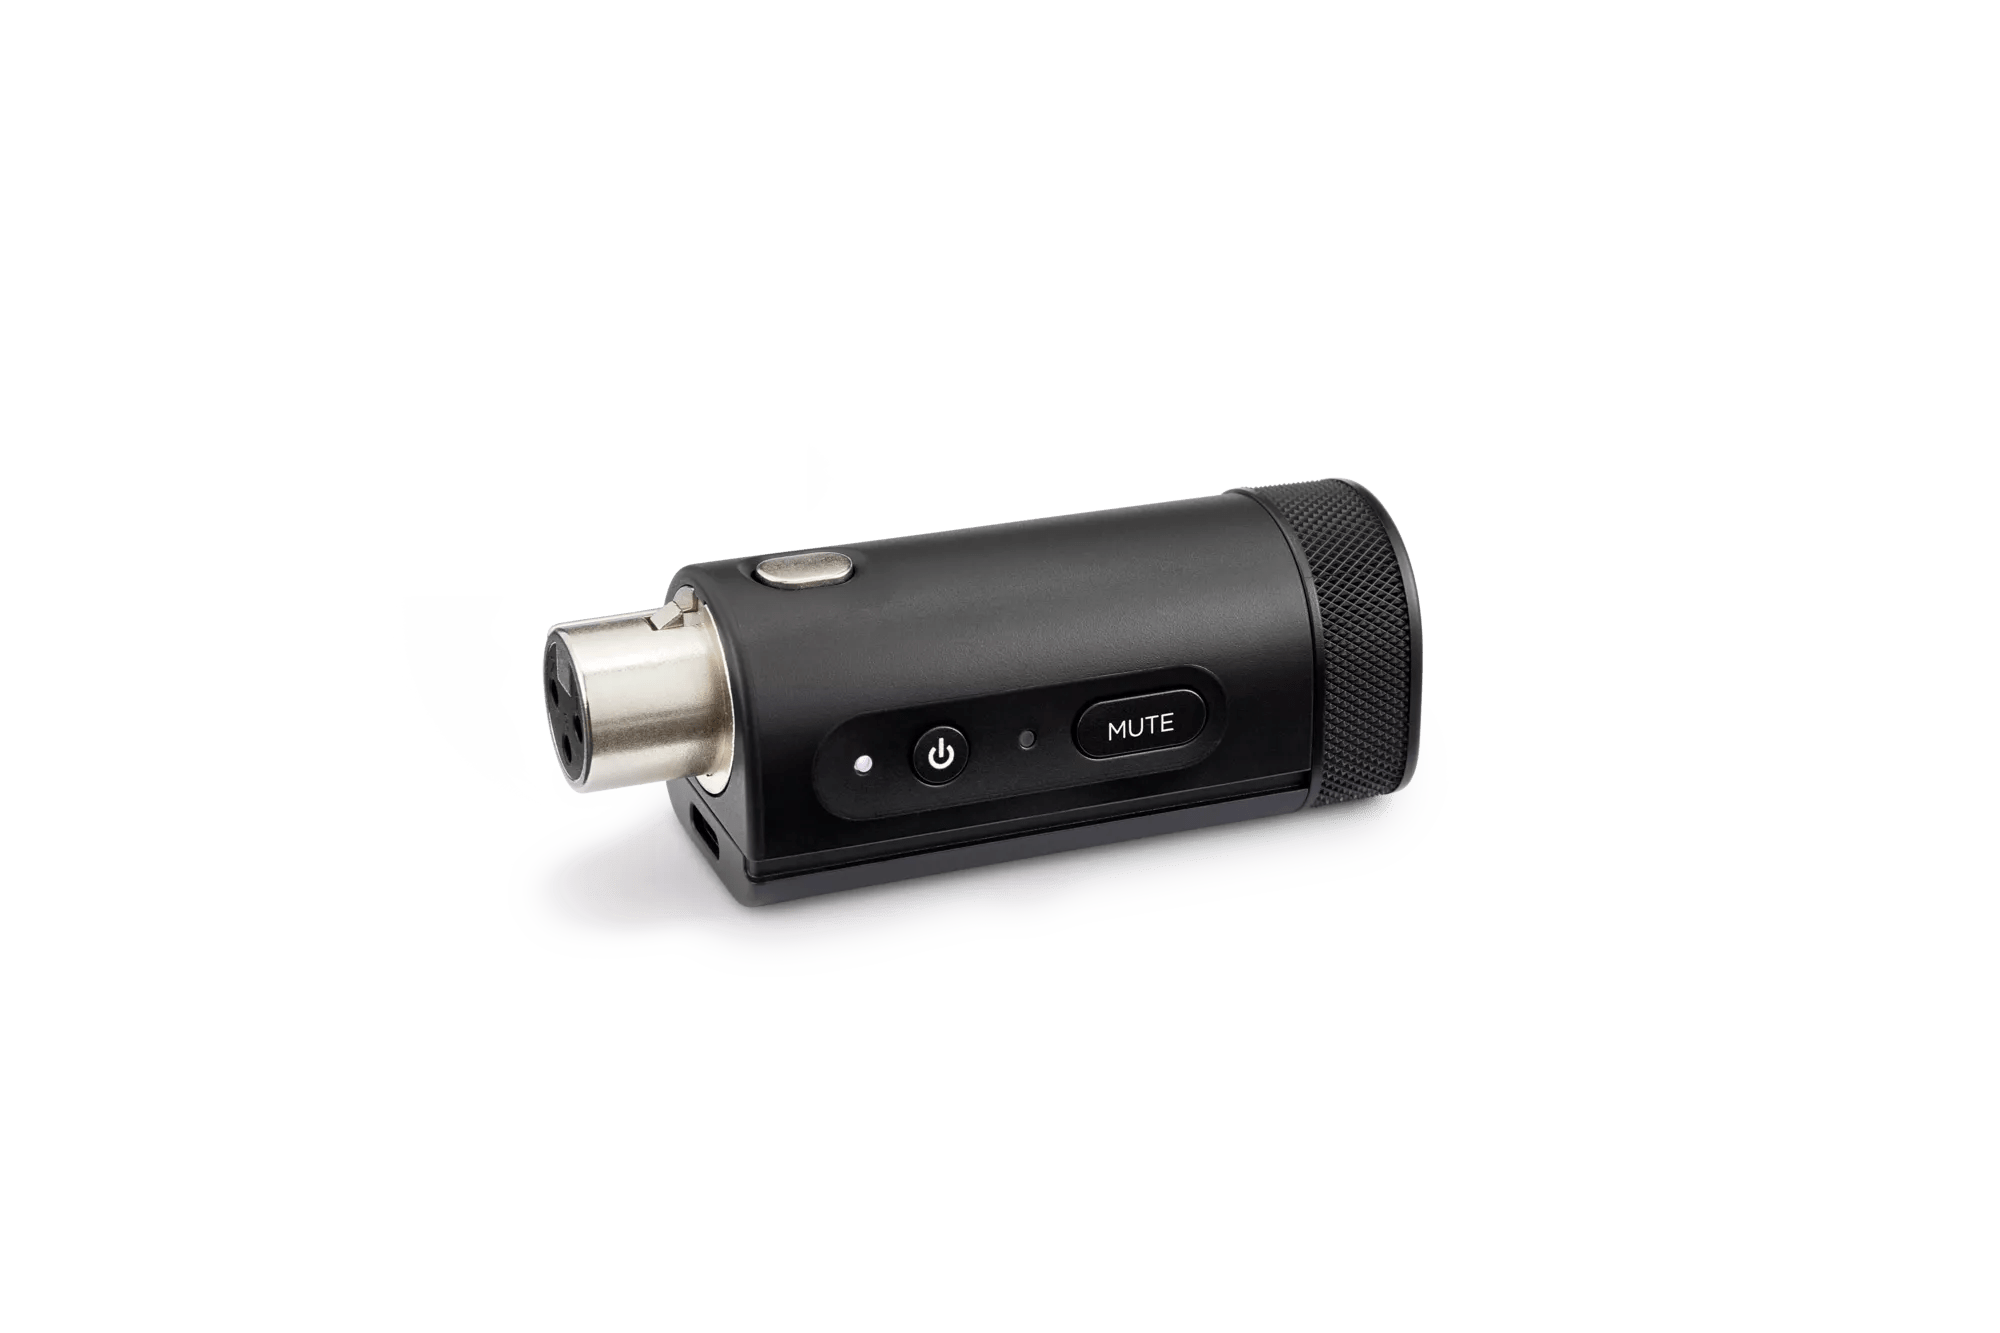 Bose S1 Pro+ Portable Bluetooth Speaker System - Black : Target